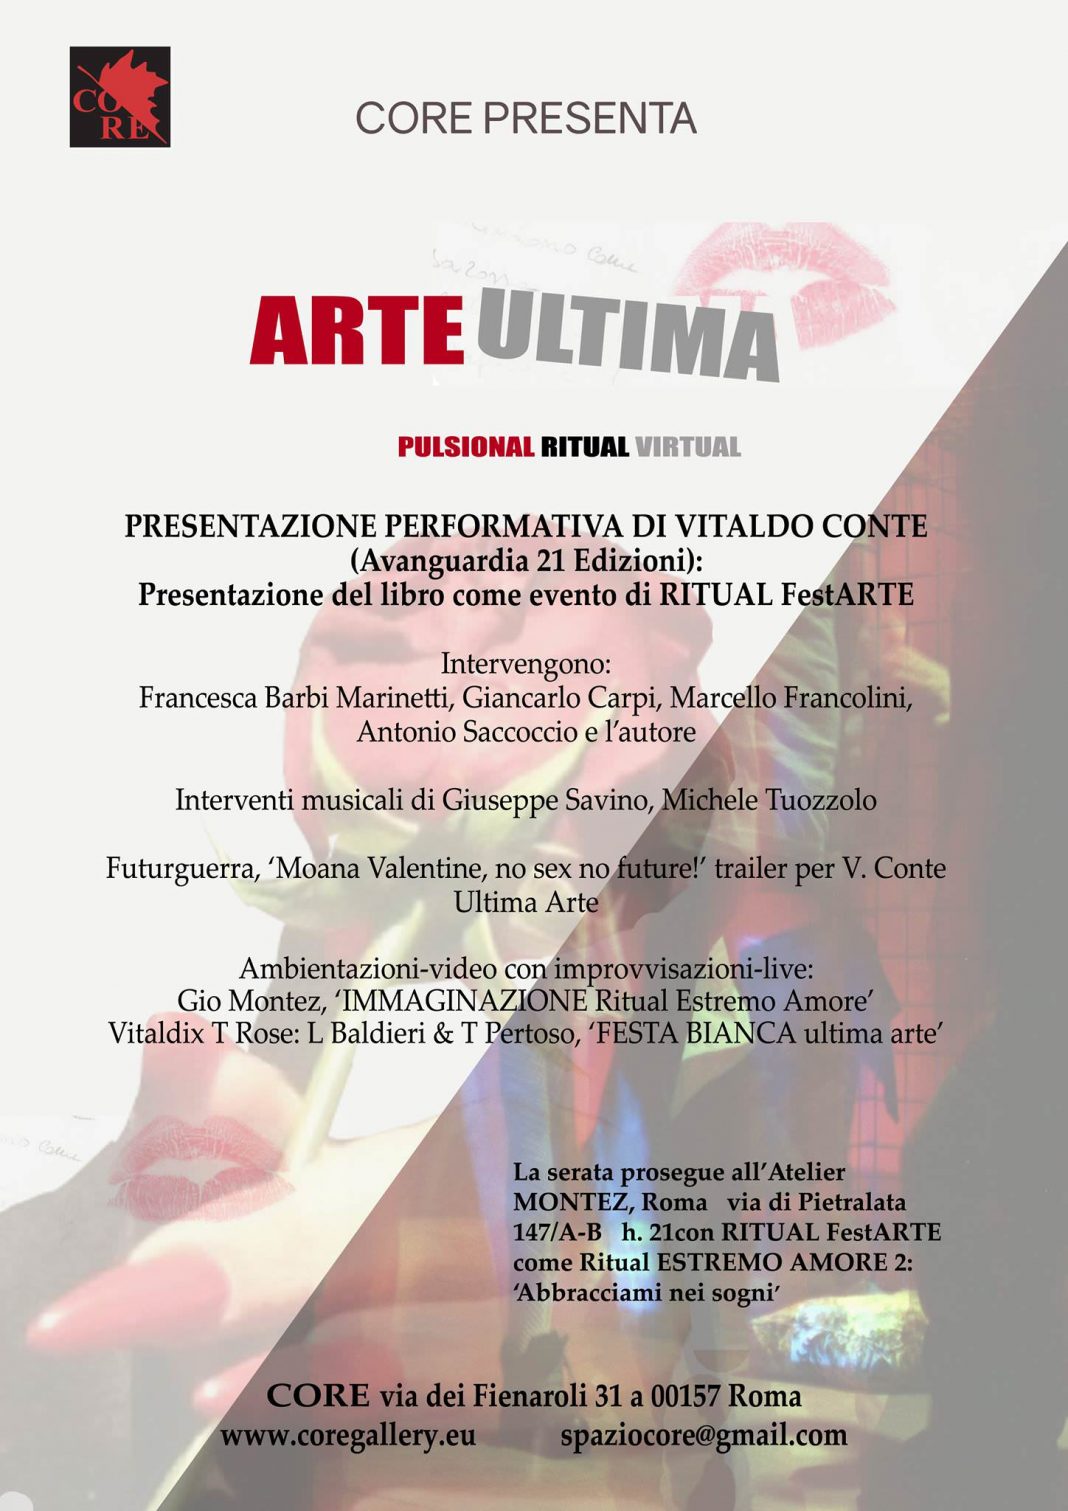 Arte Ultima Ritual FestArtehttps://www.exibart.com/repository/media/eventi/2017/01/arte-ultima-ritual-festarte-1068x1511.jpg